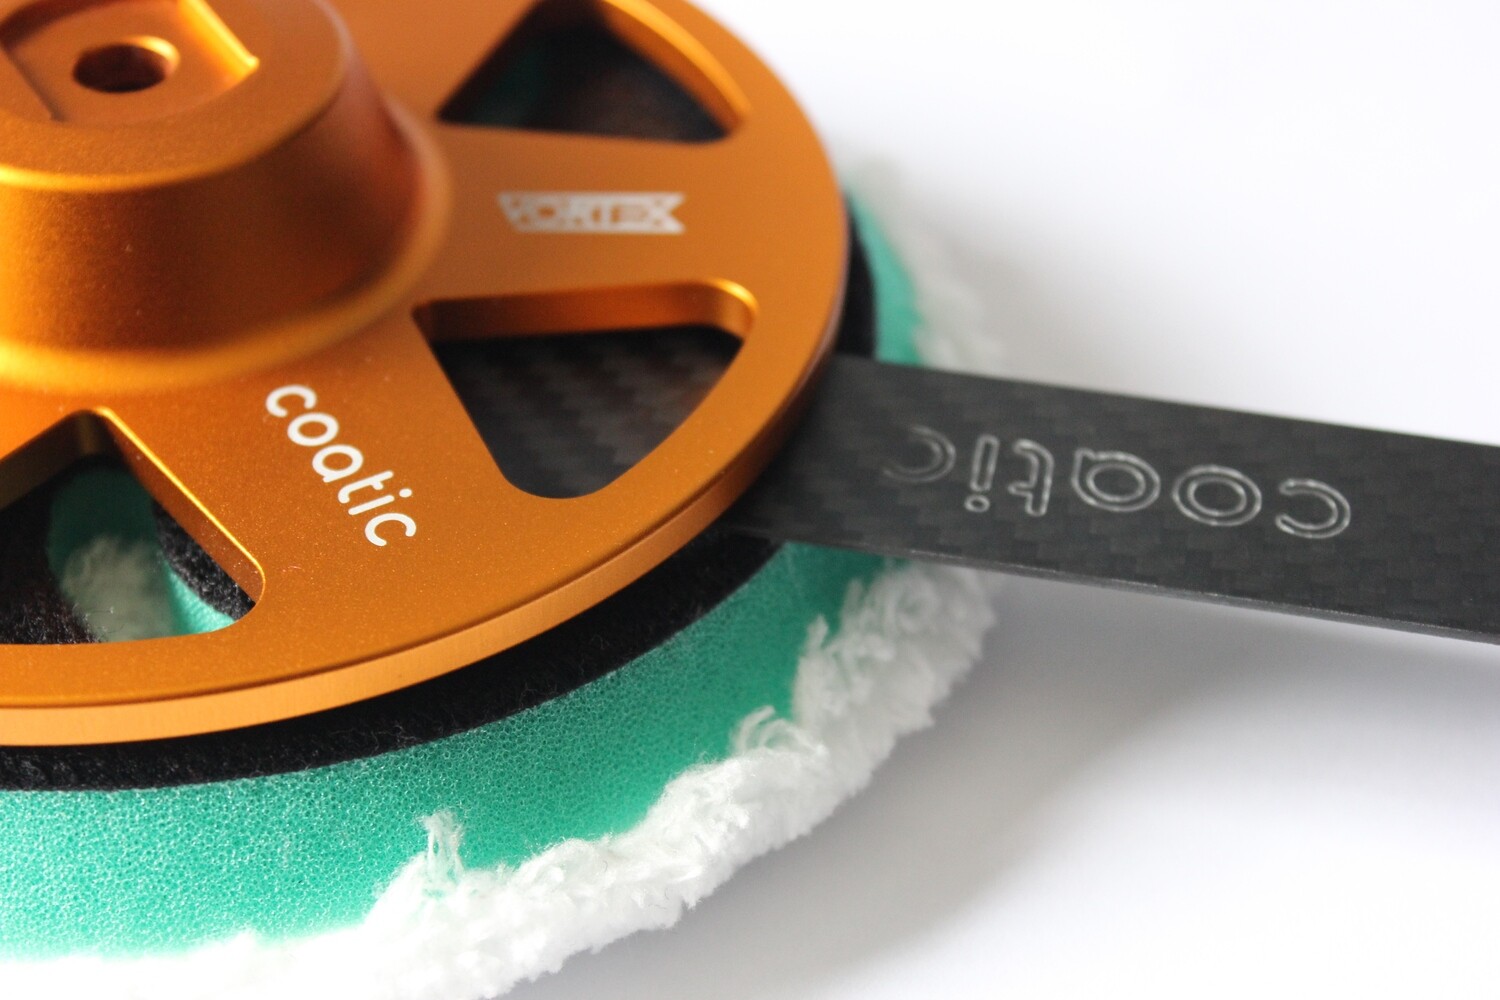 Coatic© genuine carbon fibre fiber polishing pad removal tool